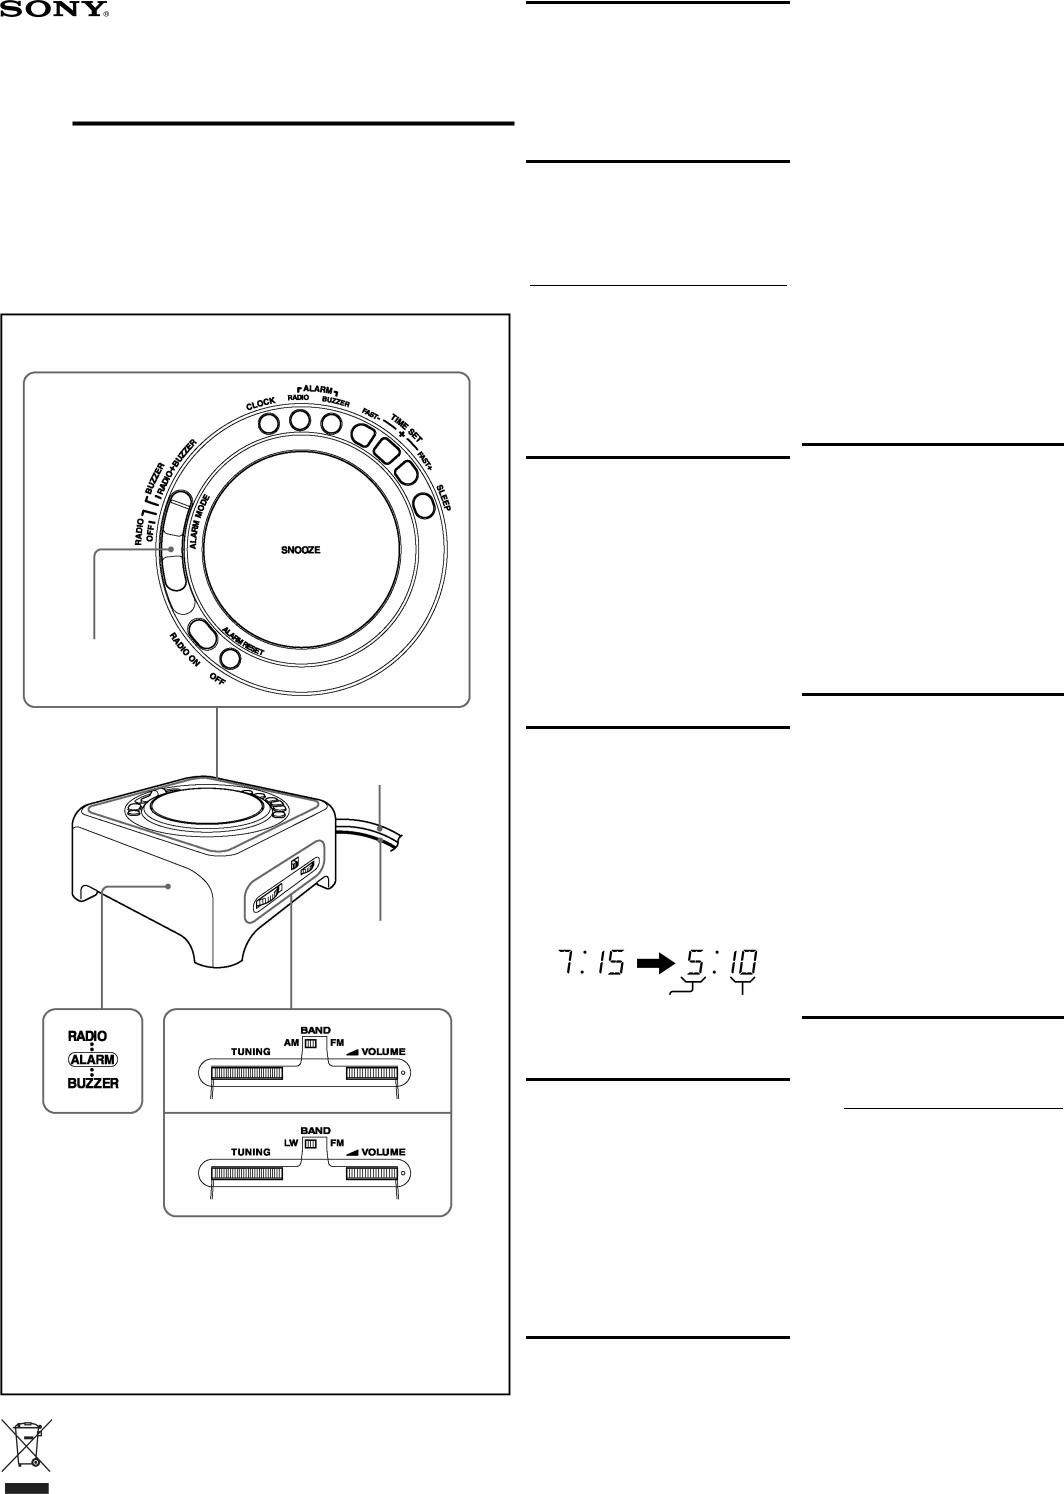 Sony ICF-C317, ICF-C317L User Manual